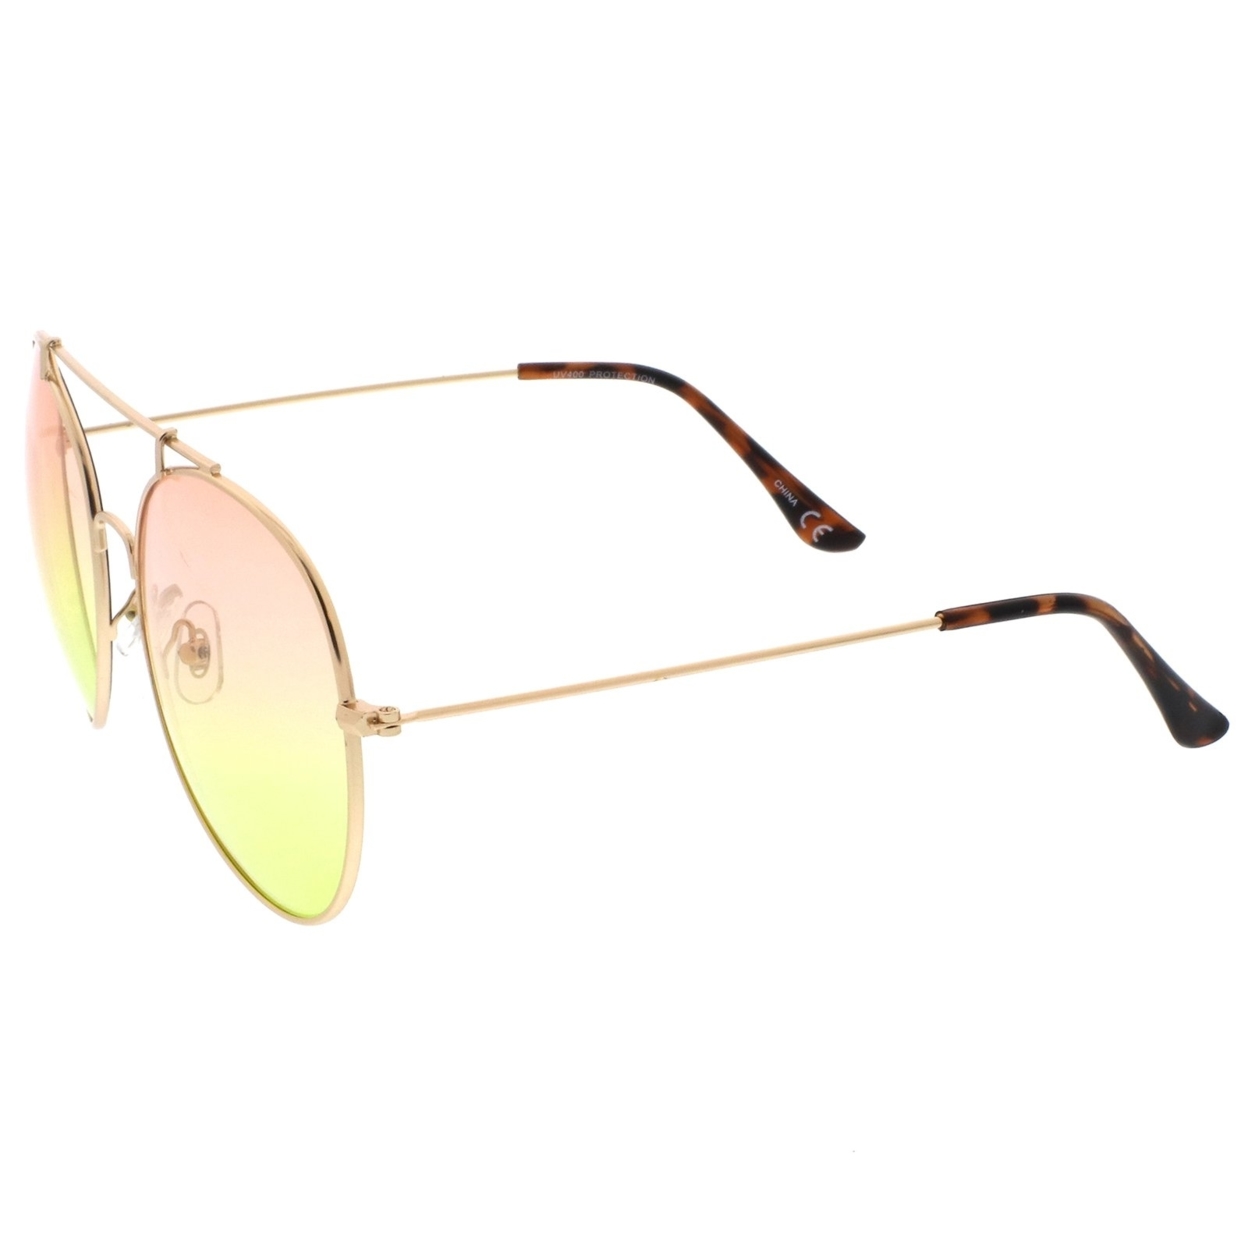 Oversize Metal Double Nose Bridge Slim Arms Gradient Round Lens Aviator Sunglasses 64mm - Gold / Orange-Yellow